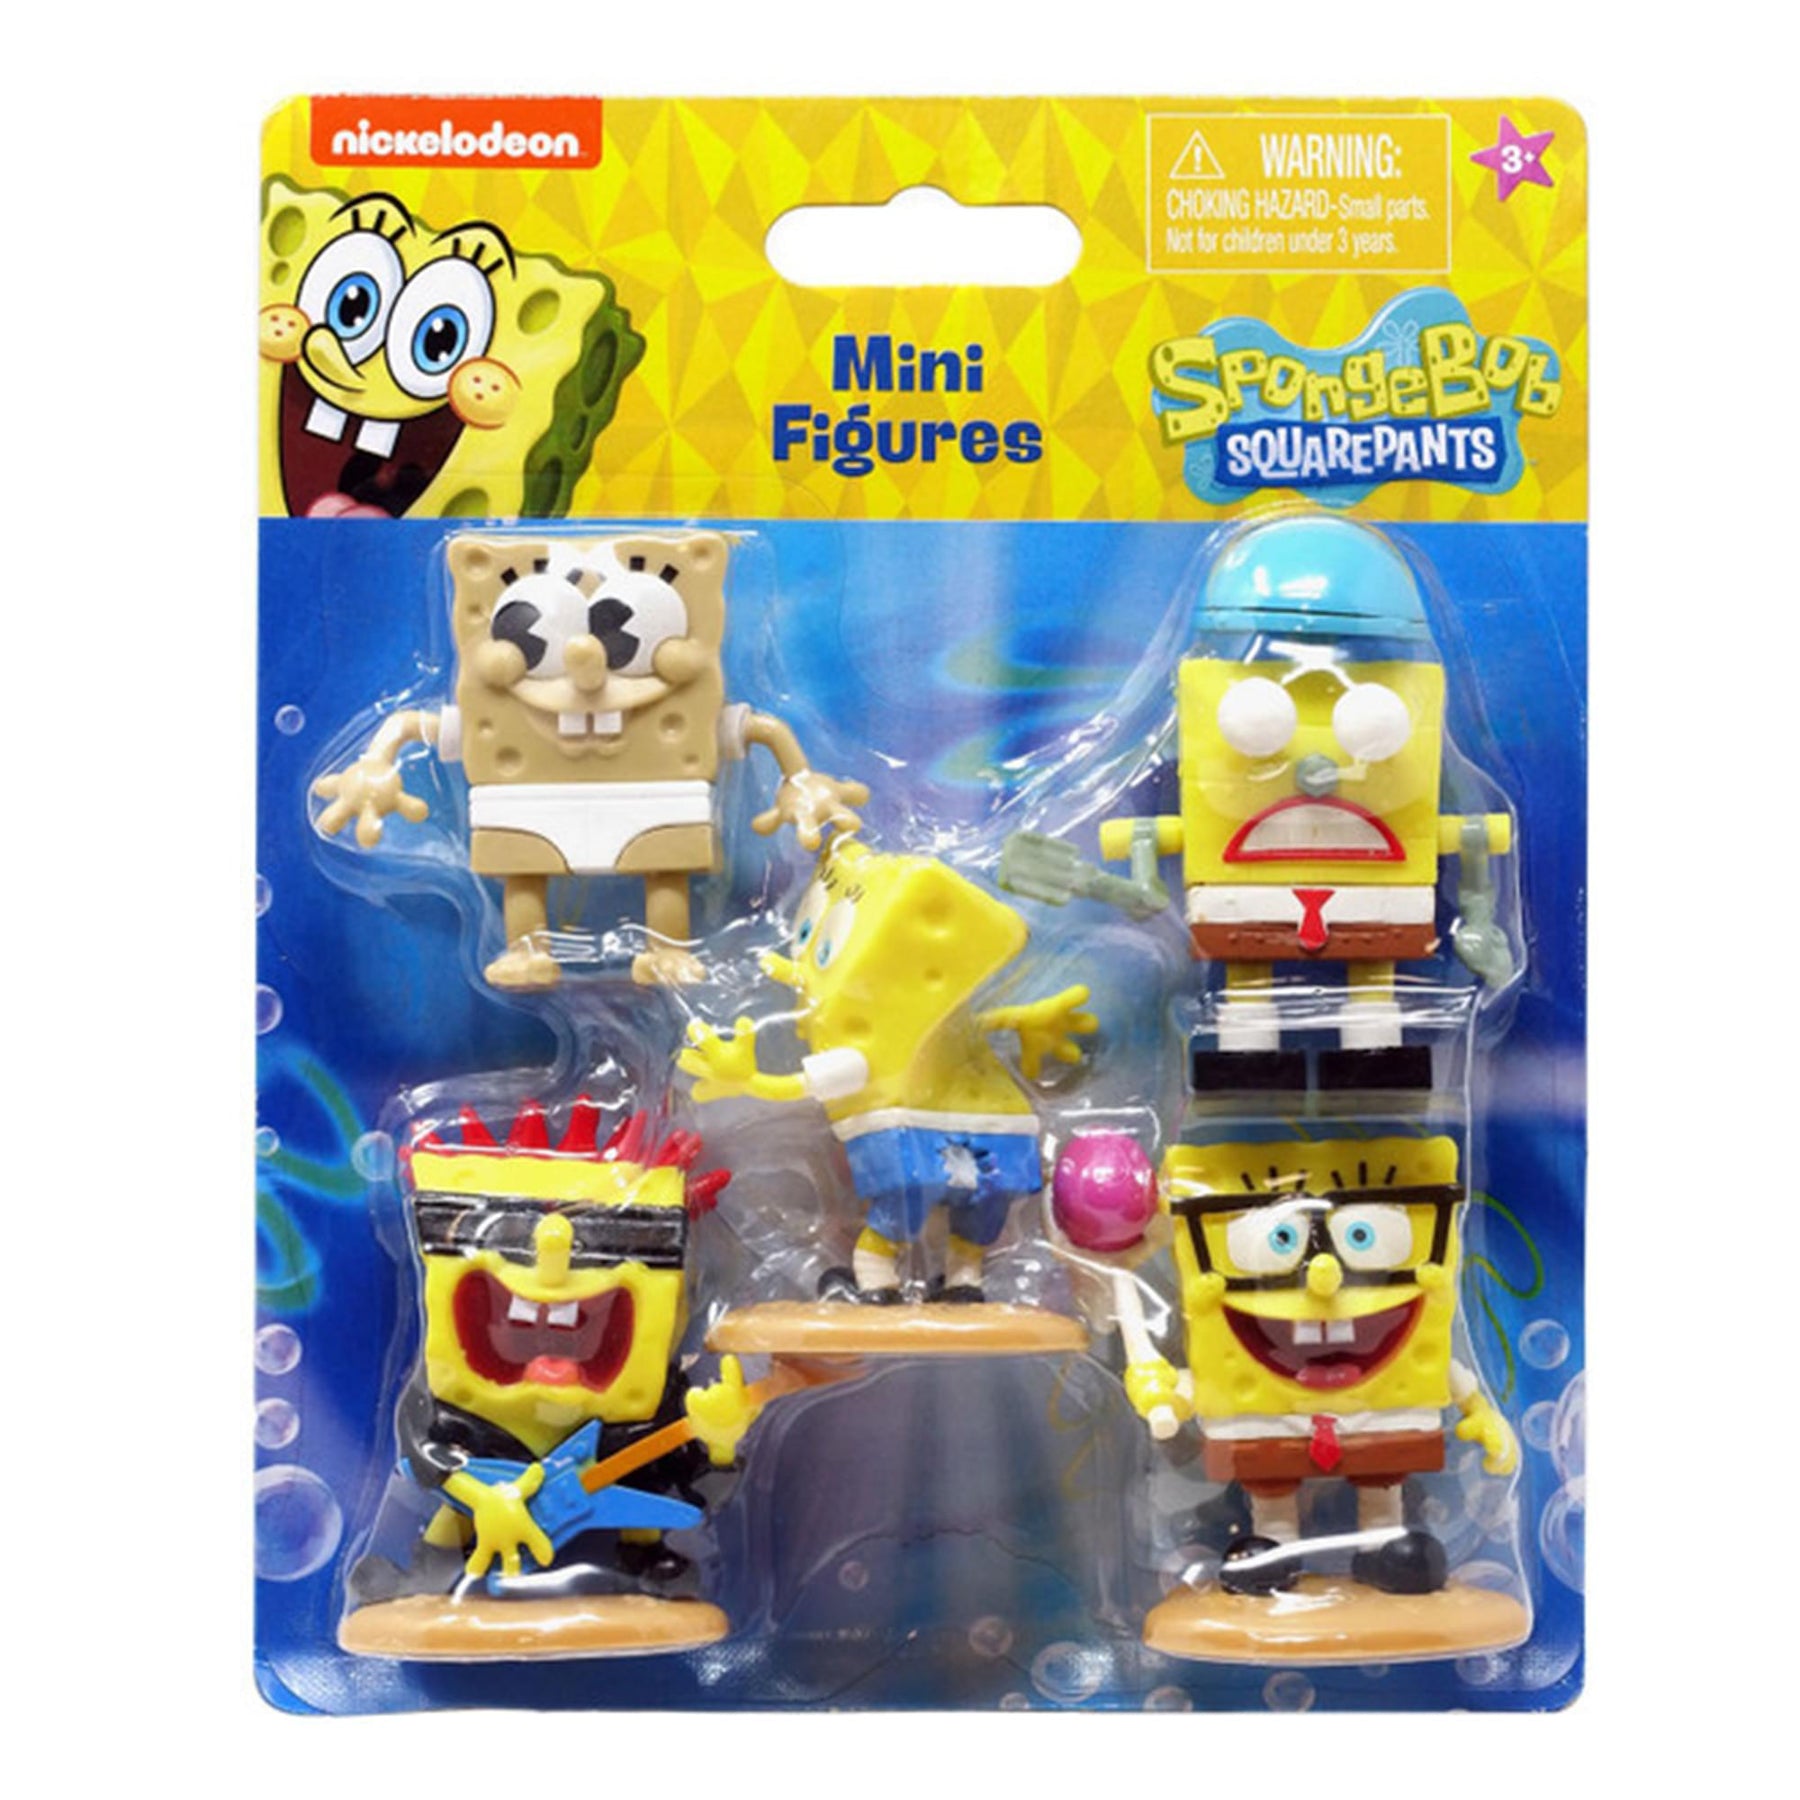 Nickelodeon SpongeBob SquarePants Minifigure 5-Pack